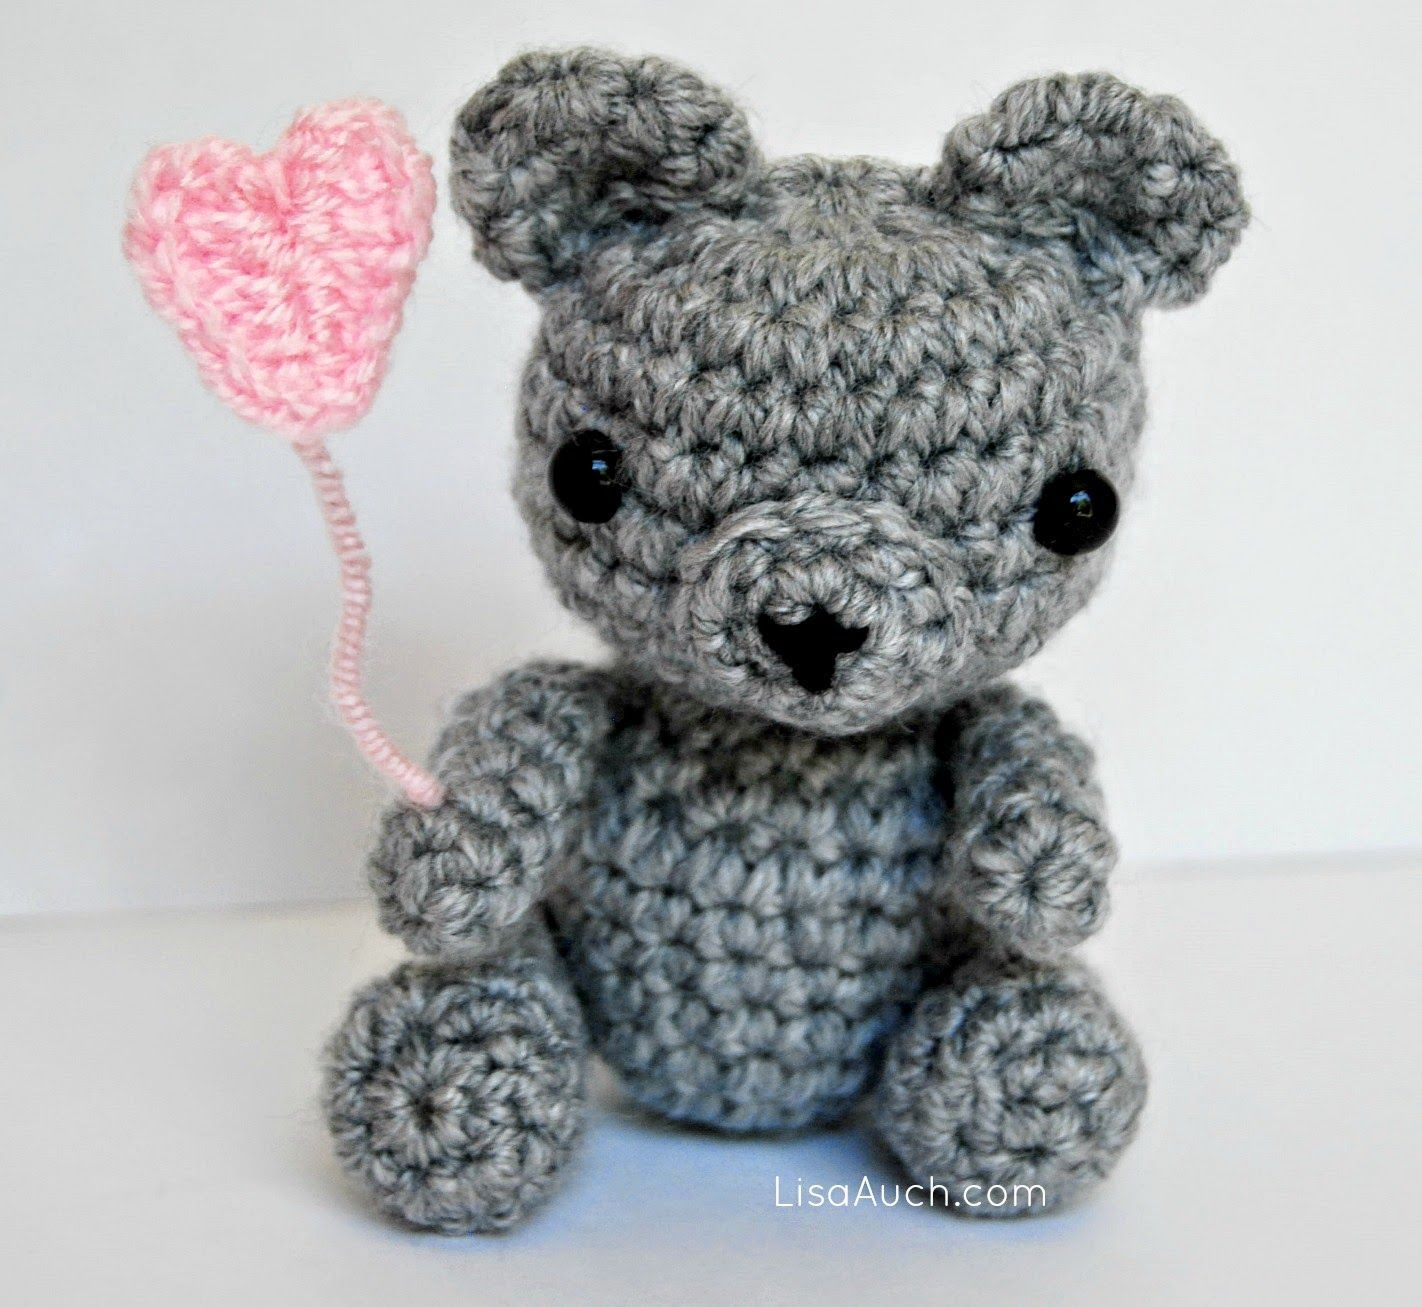 Amigurumi Bear Crochet Pattern Free Crochet Pattern For A Tiny Teddy Ba Bear Heart Free